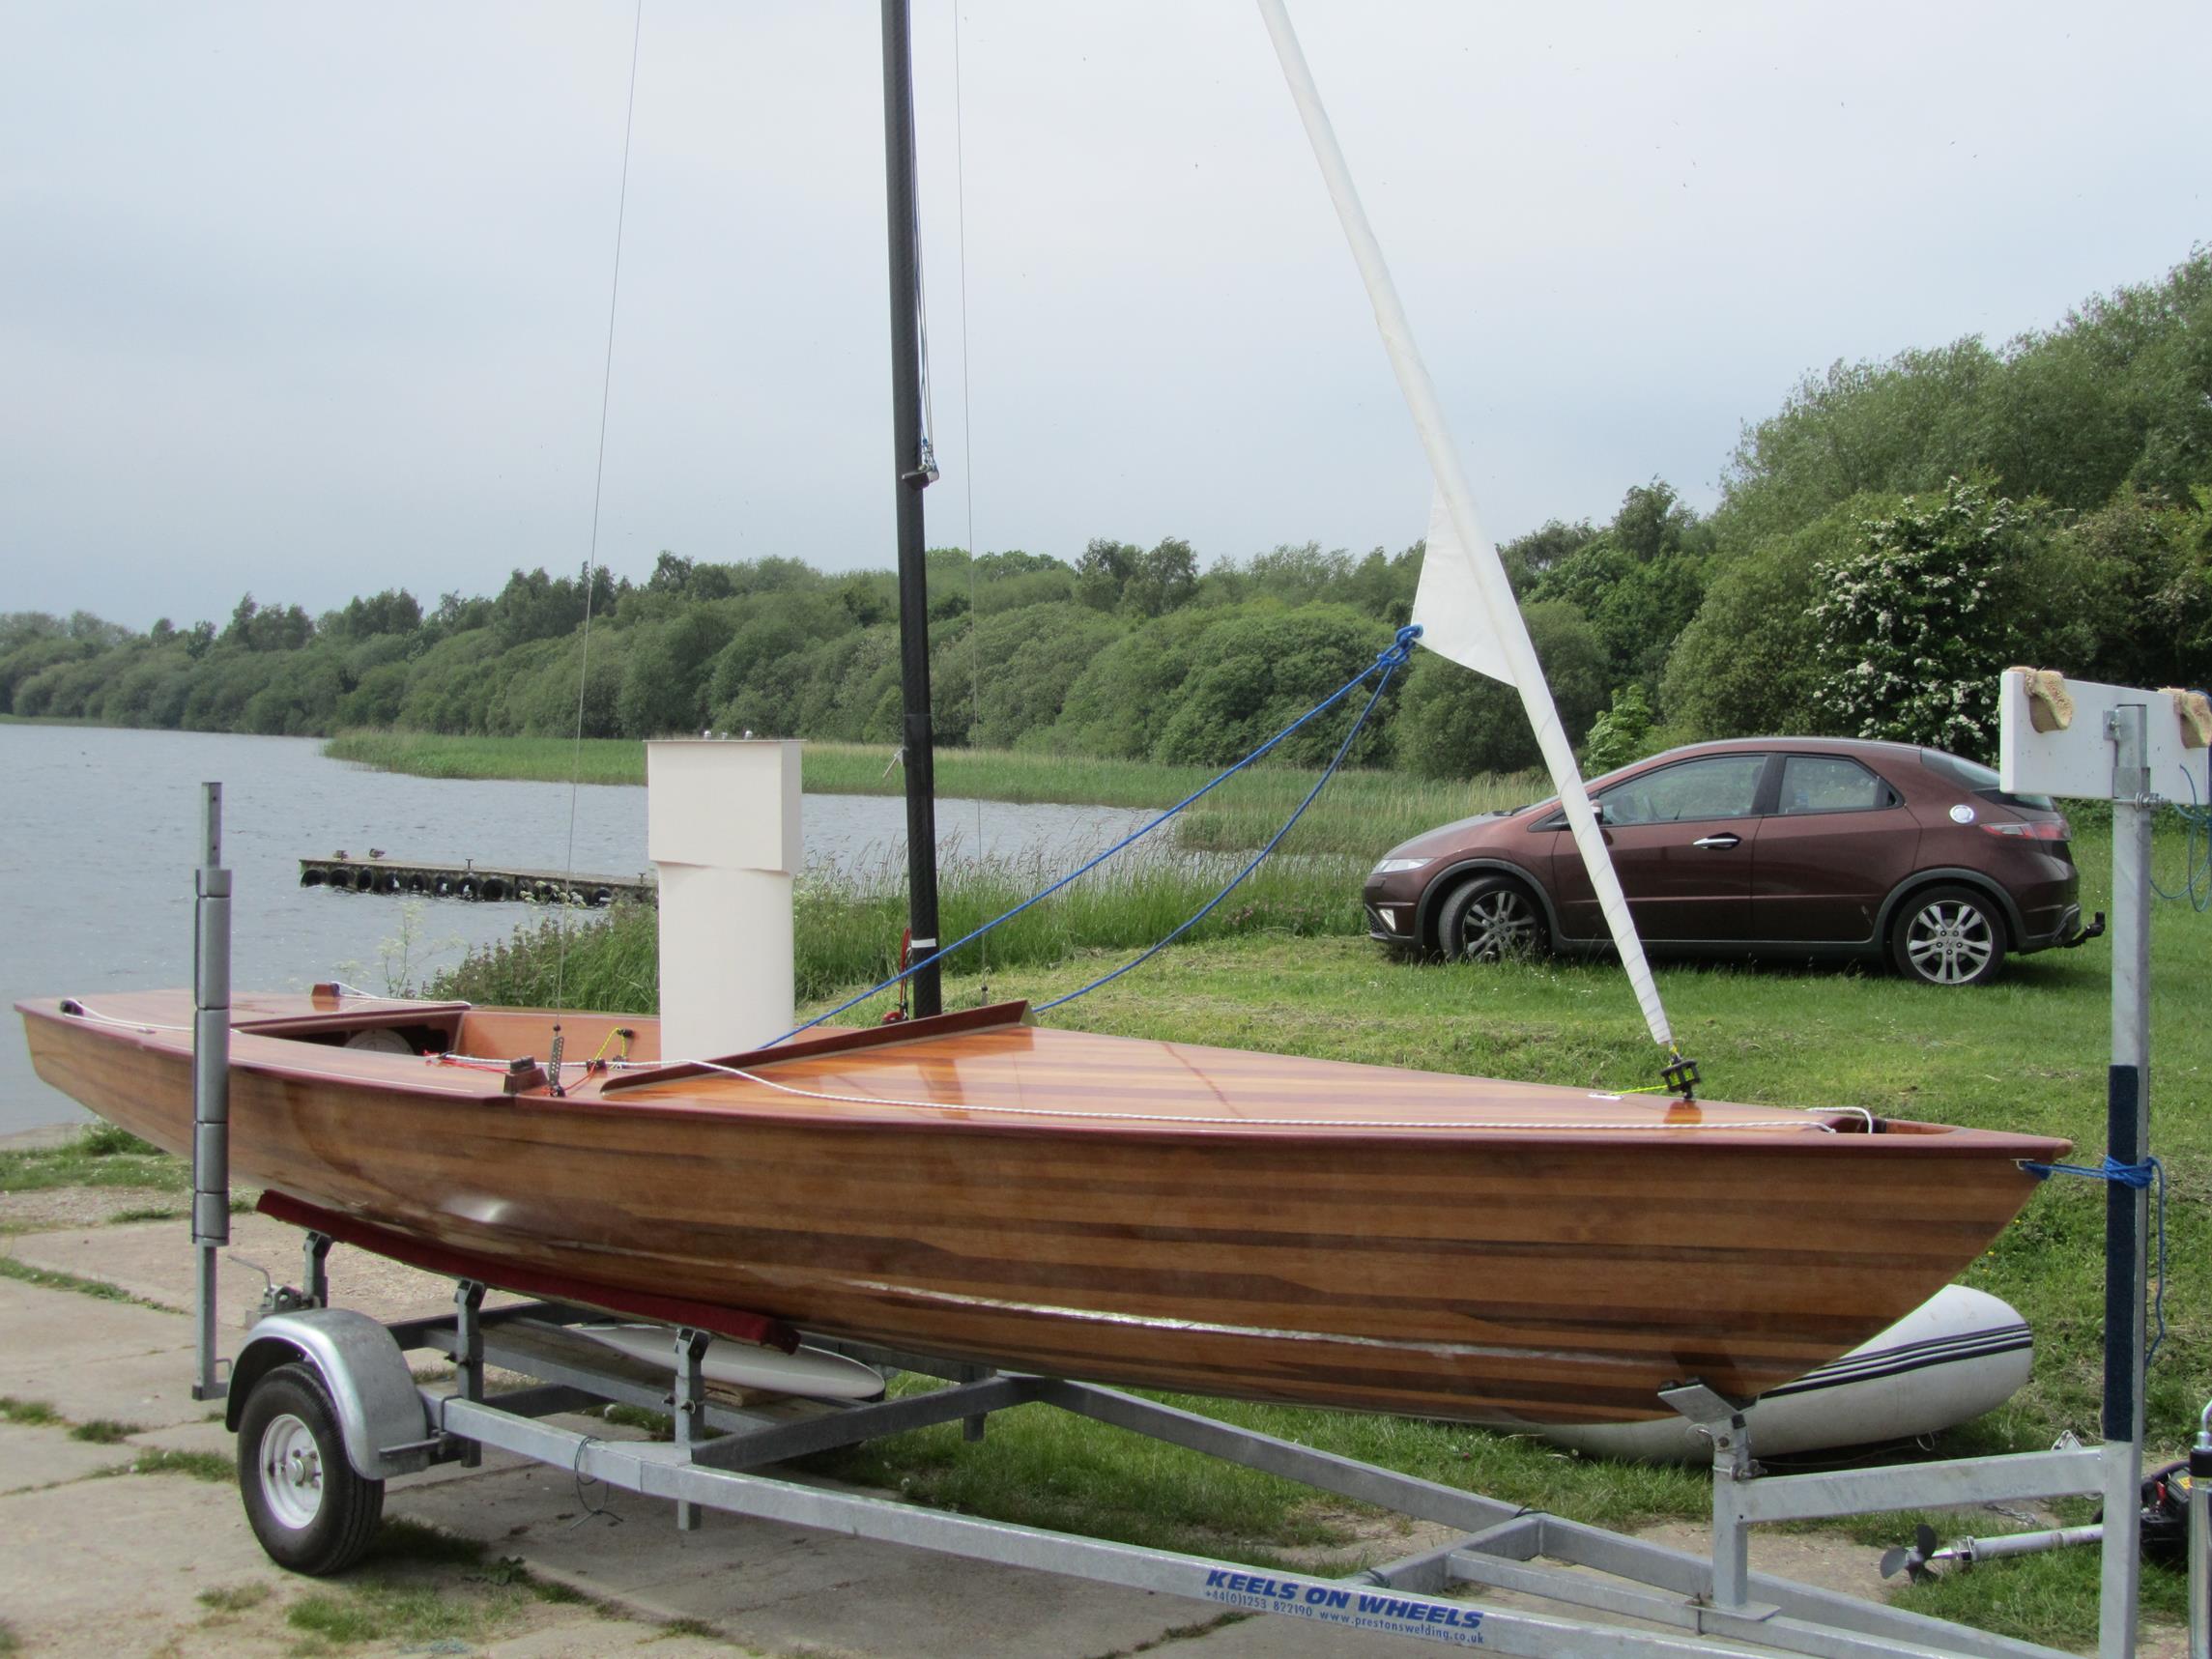 Classic Racing Keel Boat